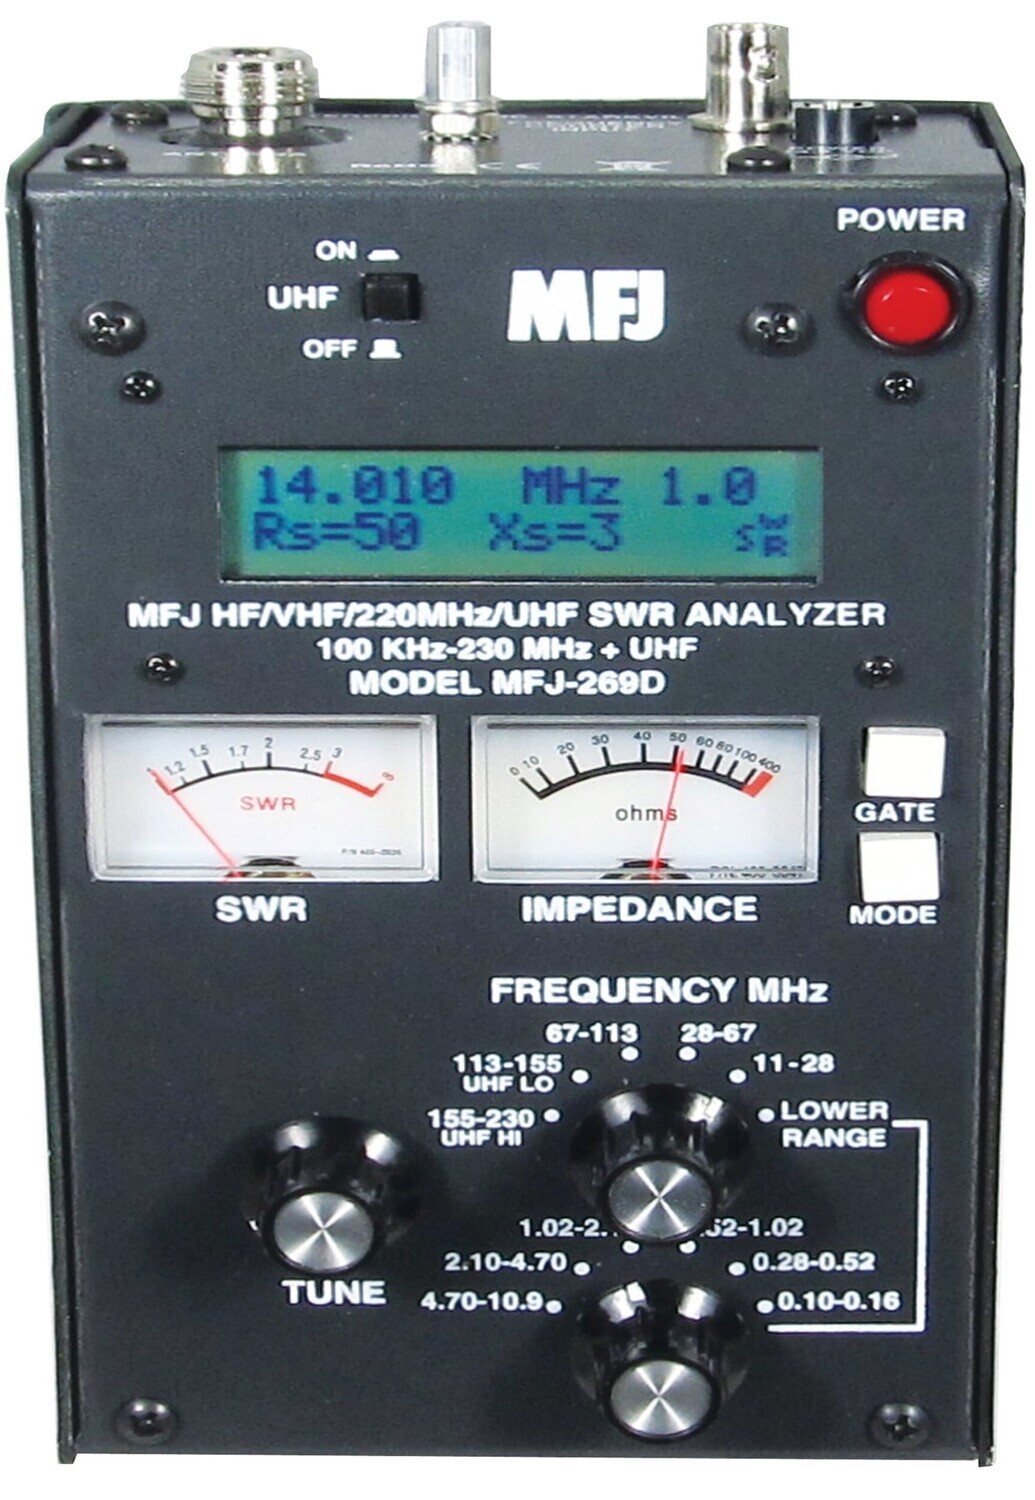 MFJ 269D HF/VHF/220/440